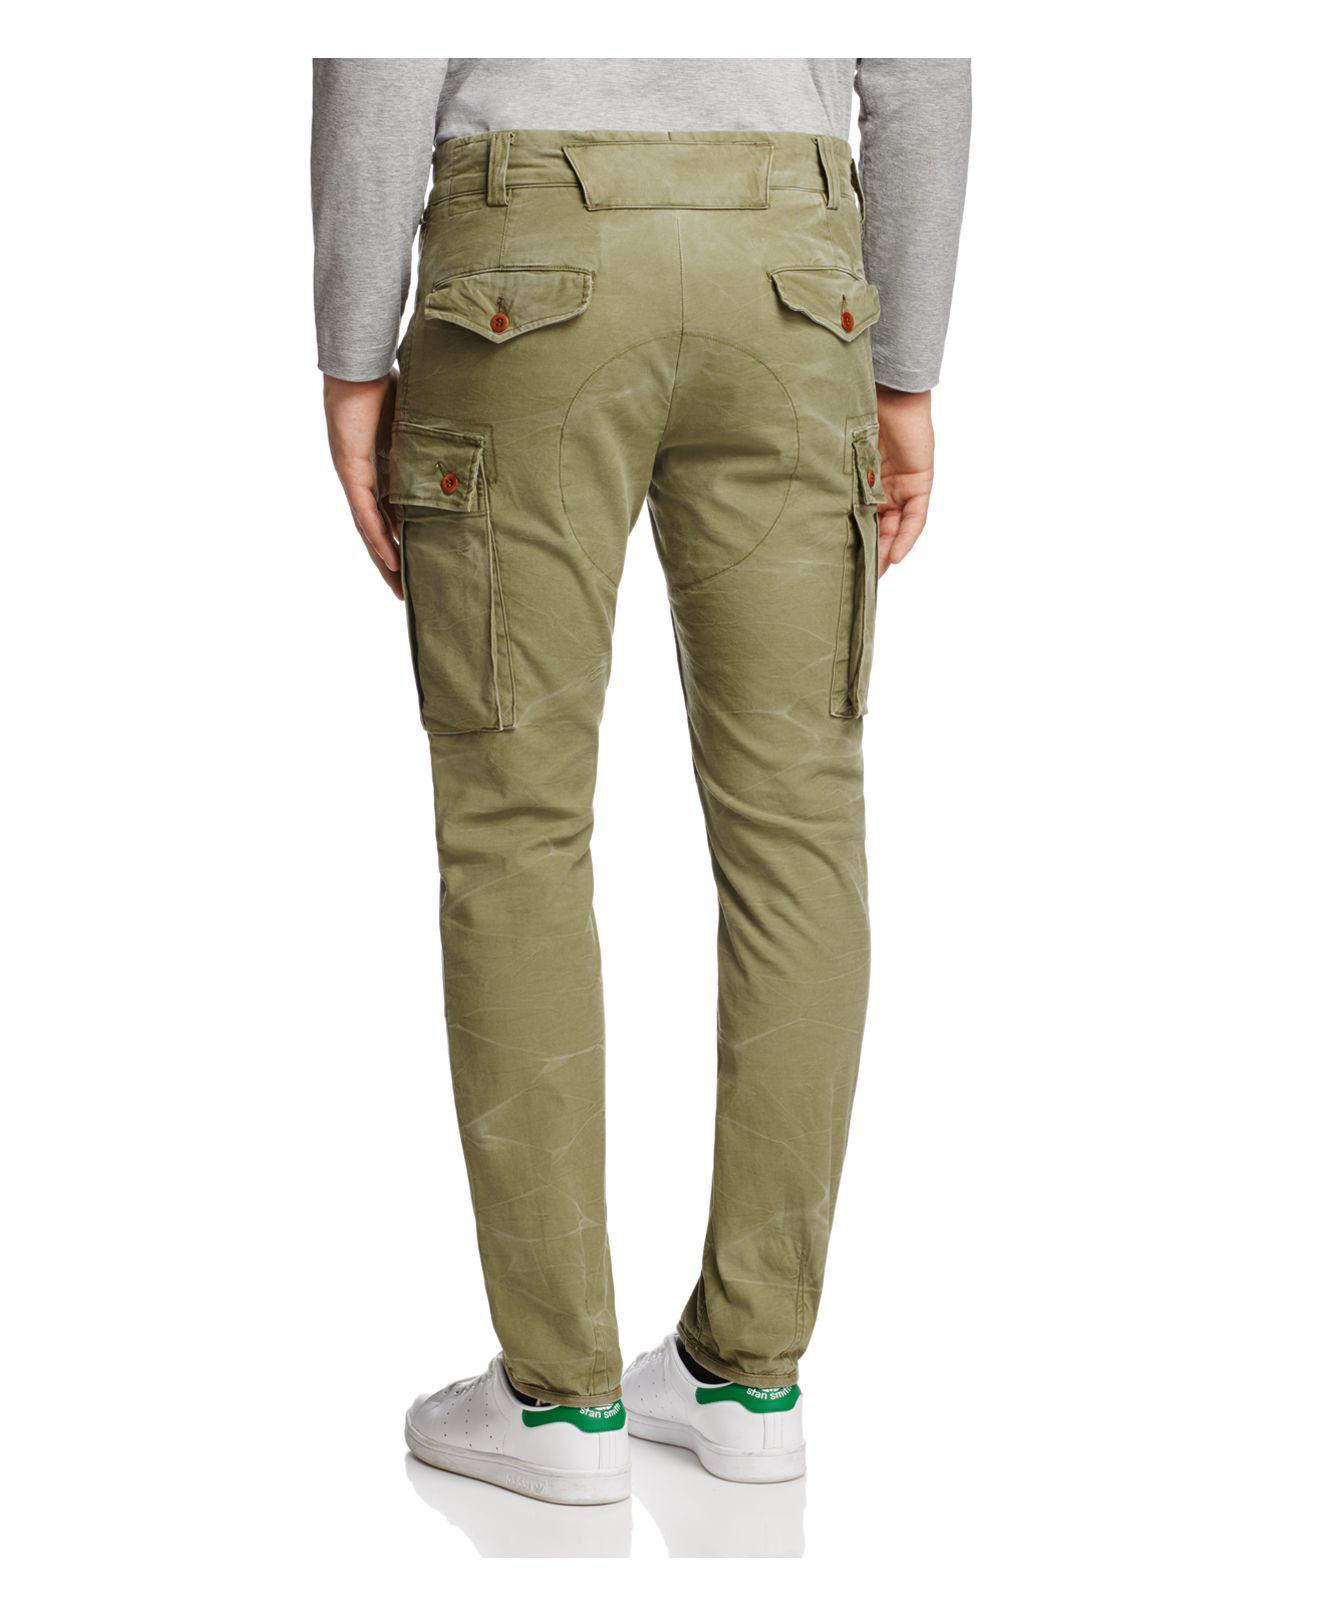 Polo Ralph Lauren Mountain Slim Fit Cargo Pants in Green for Men - Lyst